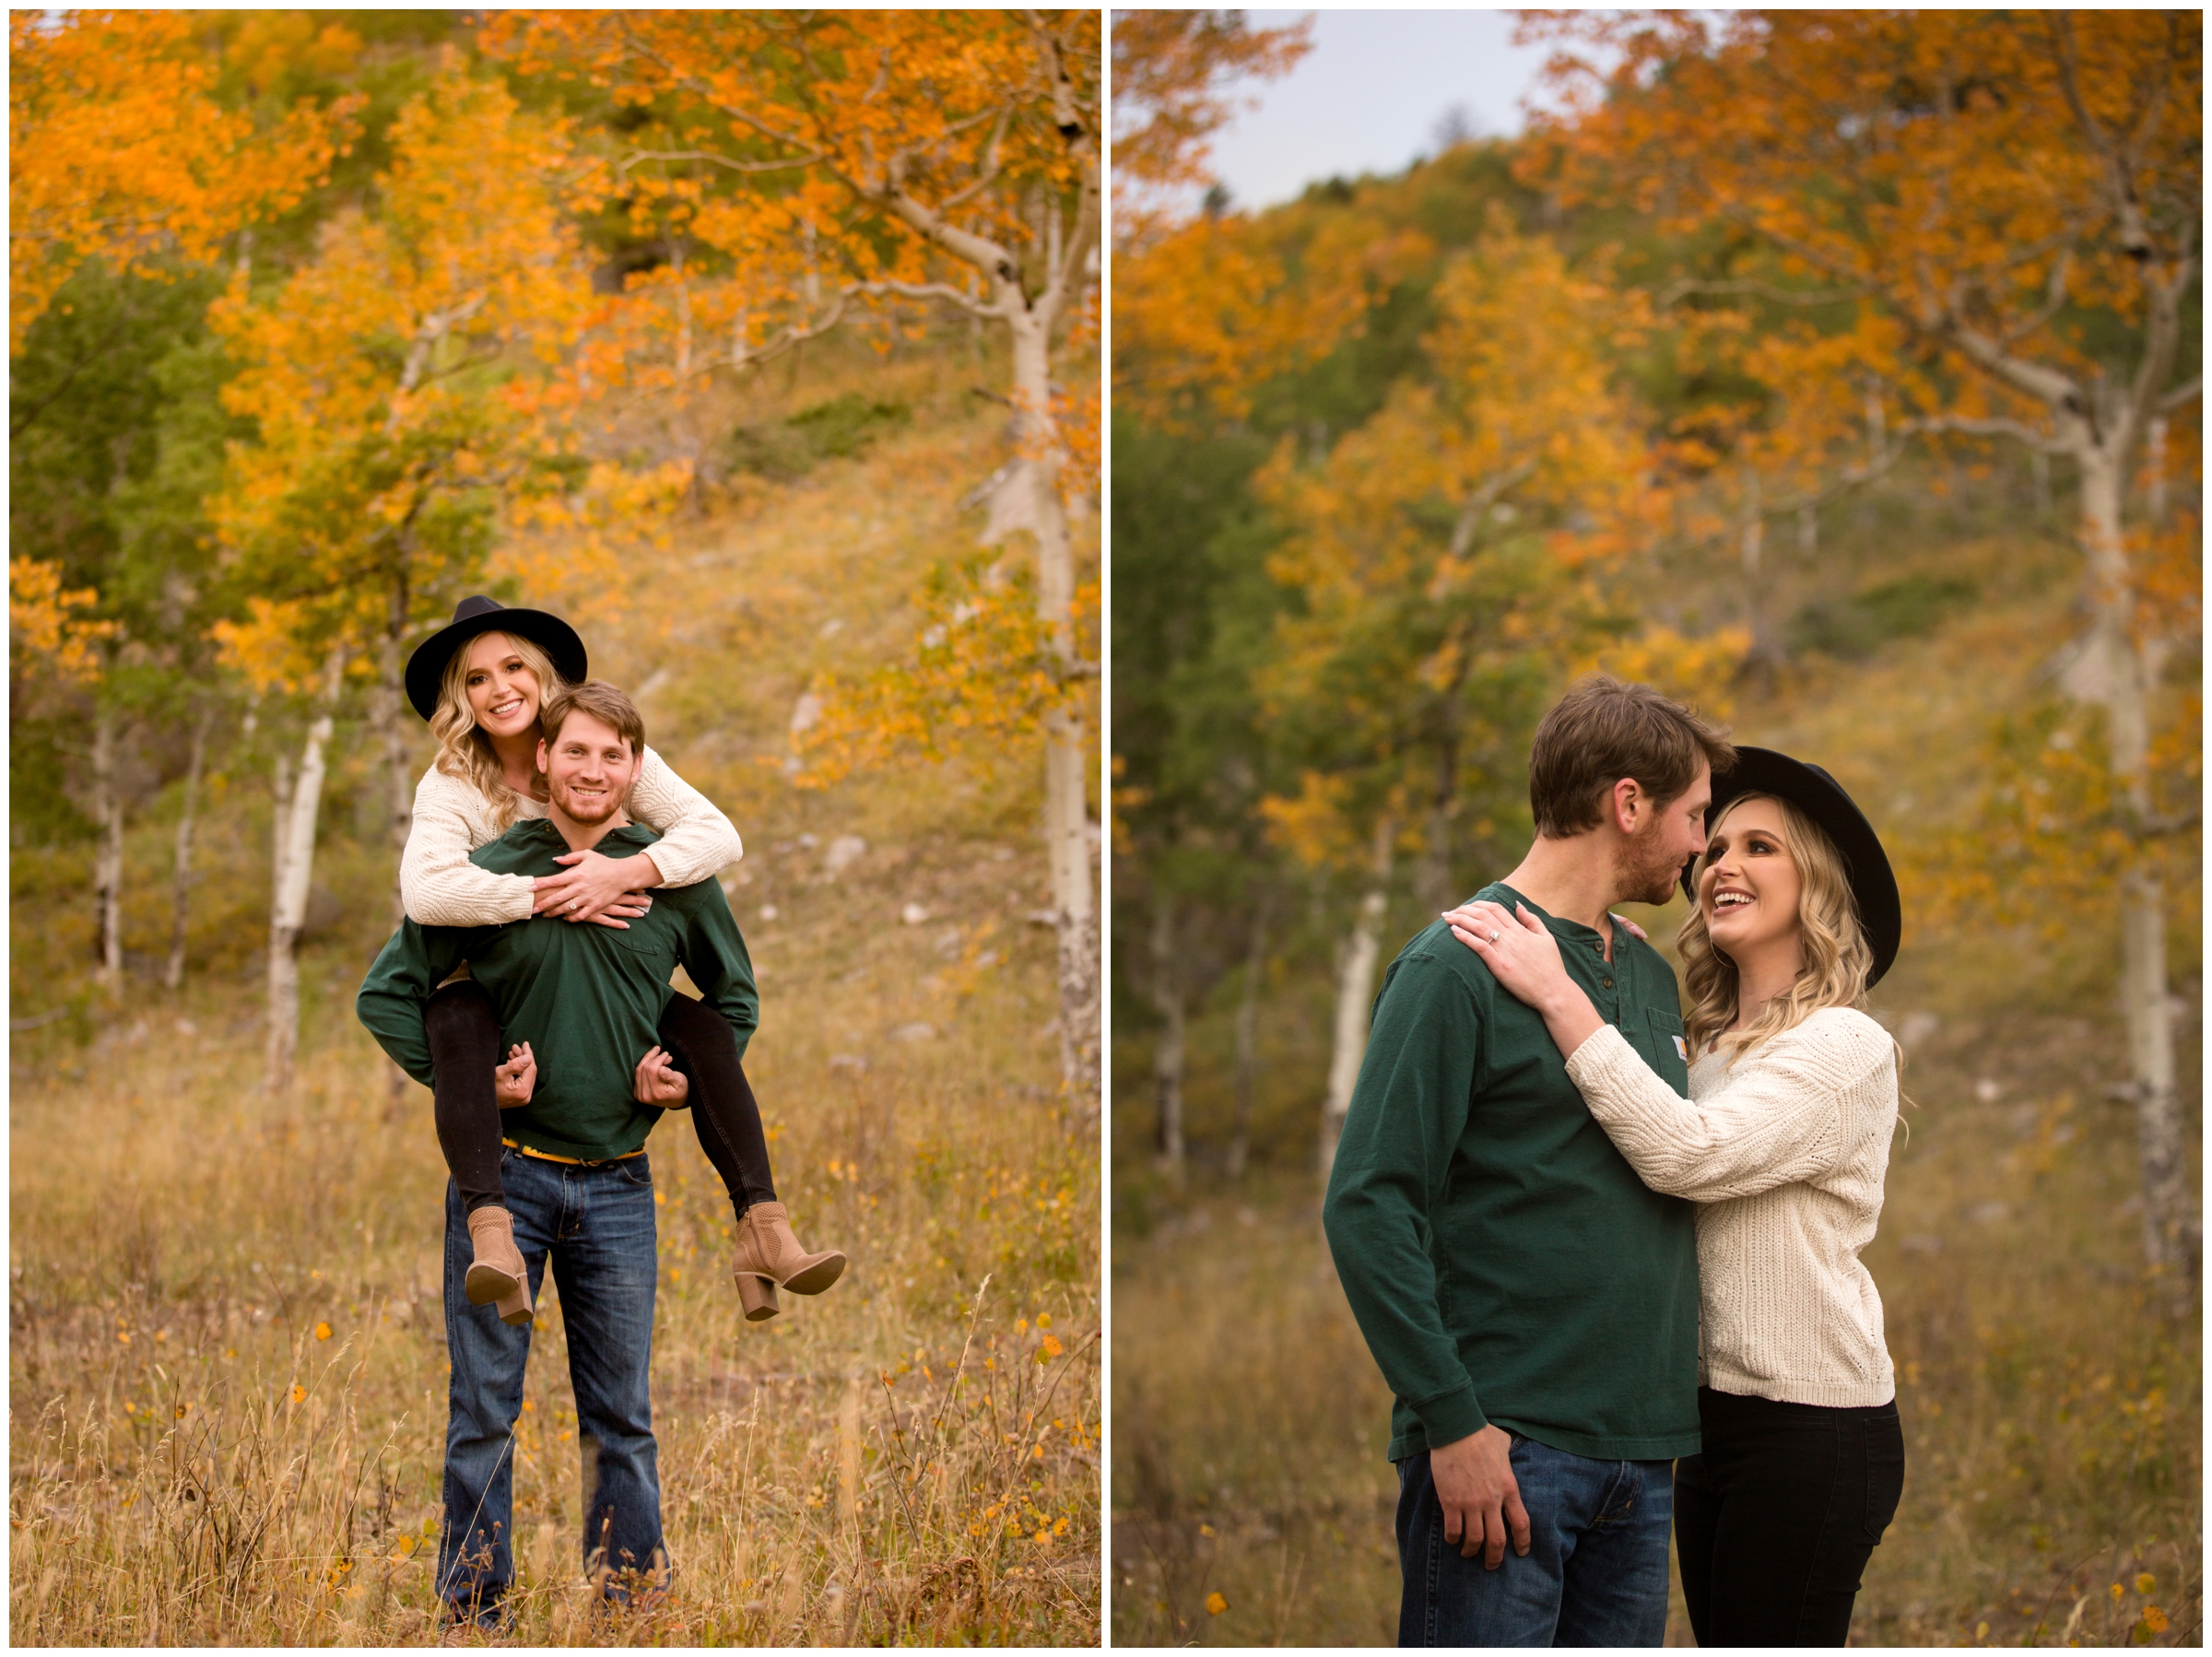 piggy back ride in aspen grove during Colorado fall engagement photos 